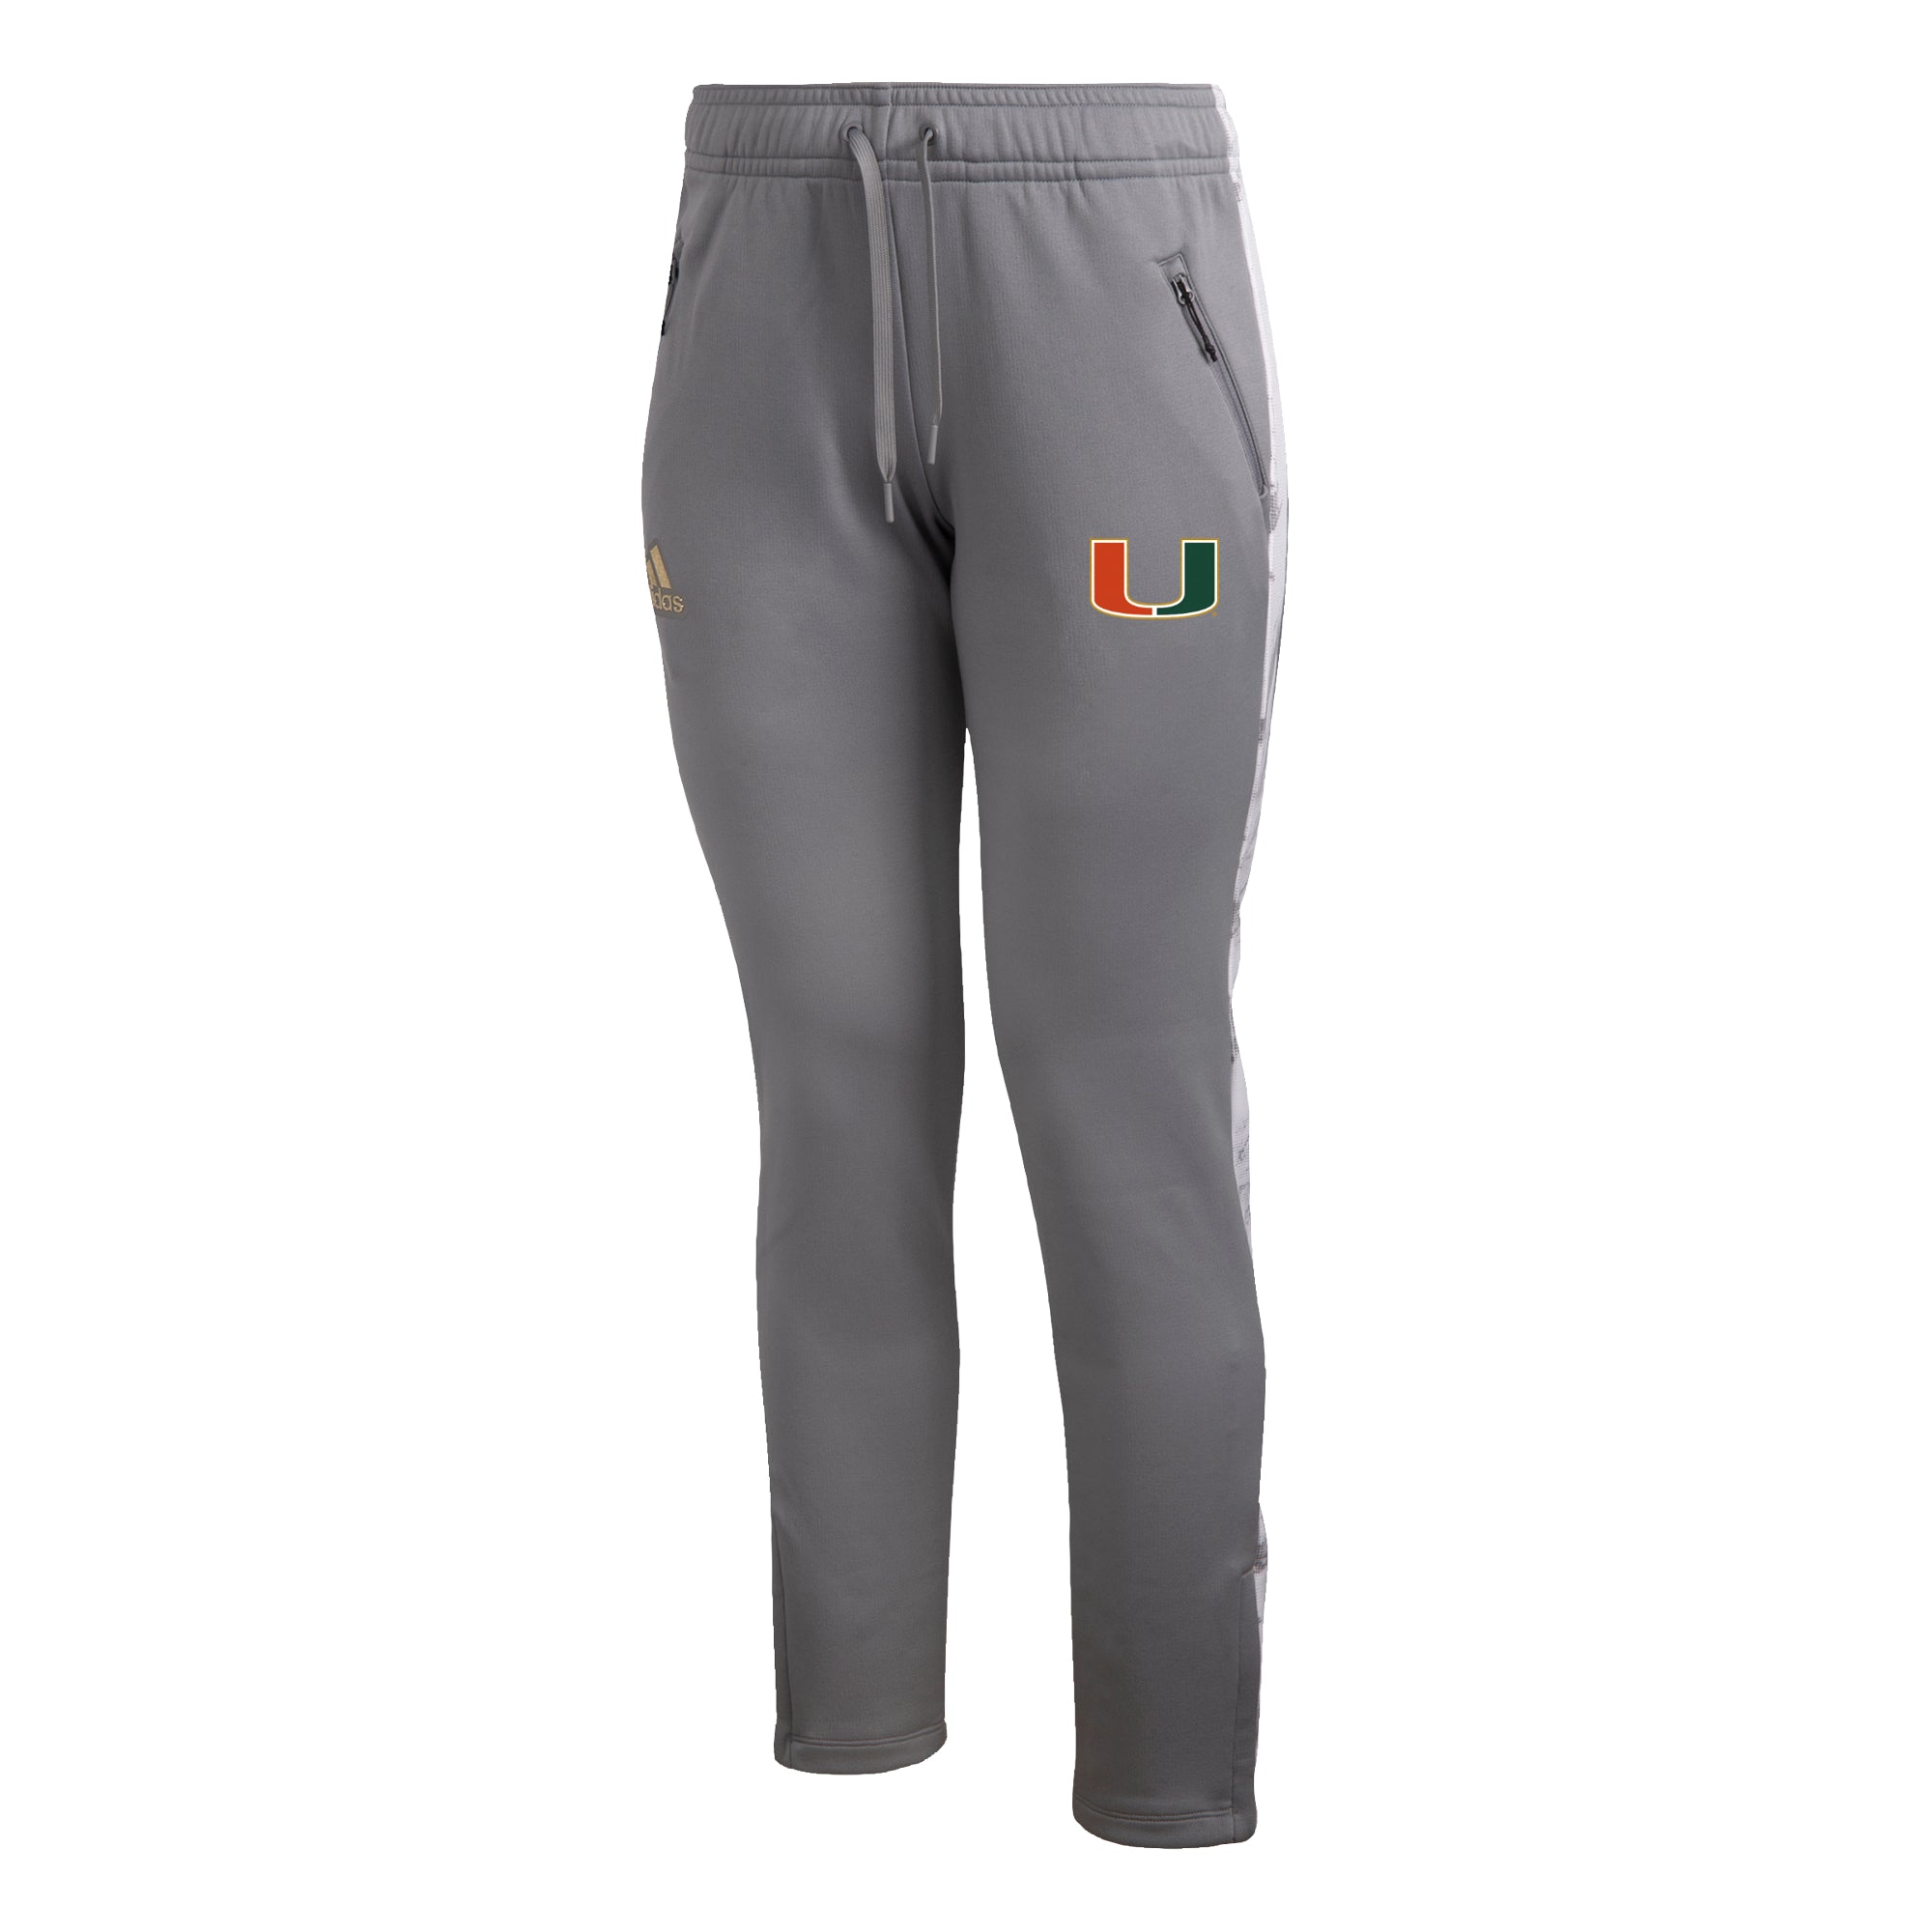 Miami Hurricanes adidas Post Season Travel Warm Up Pants w/Camo Sides - Light Grey